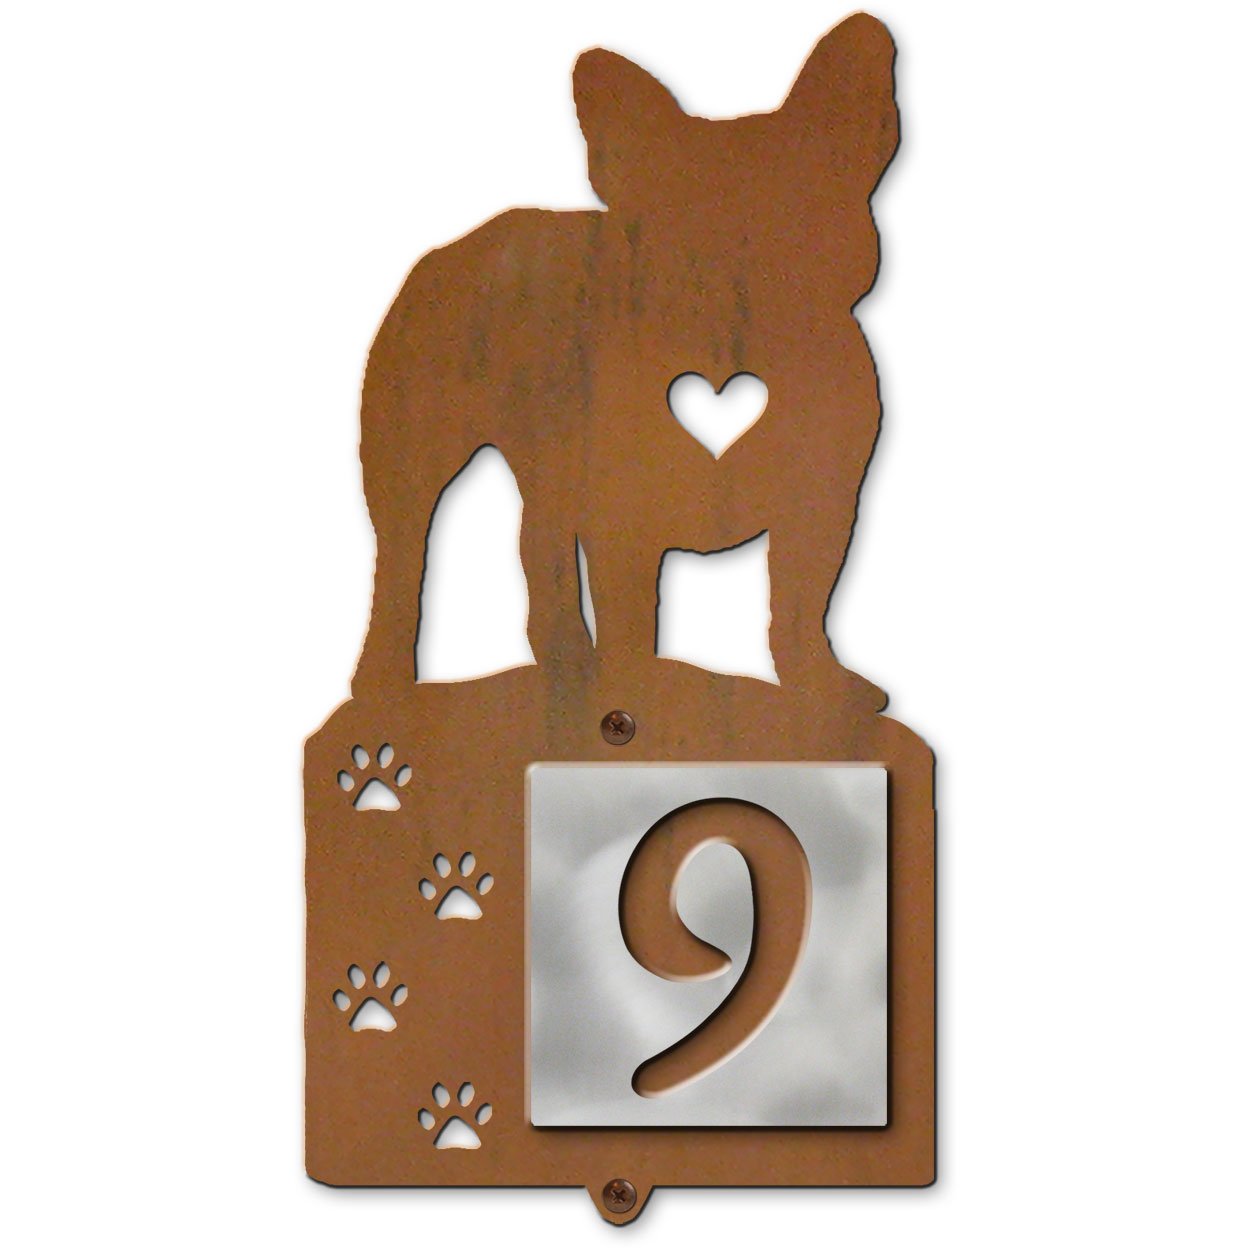 606211 - French Bulldog Dog Tracks Single-Digit Metal Tile House Number